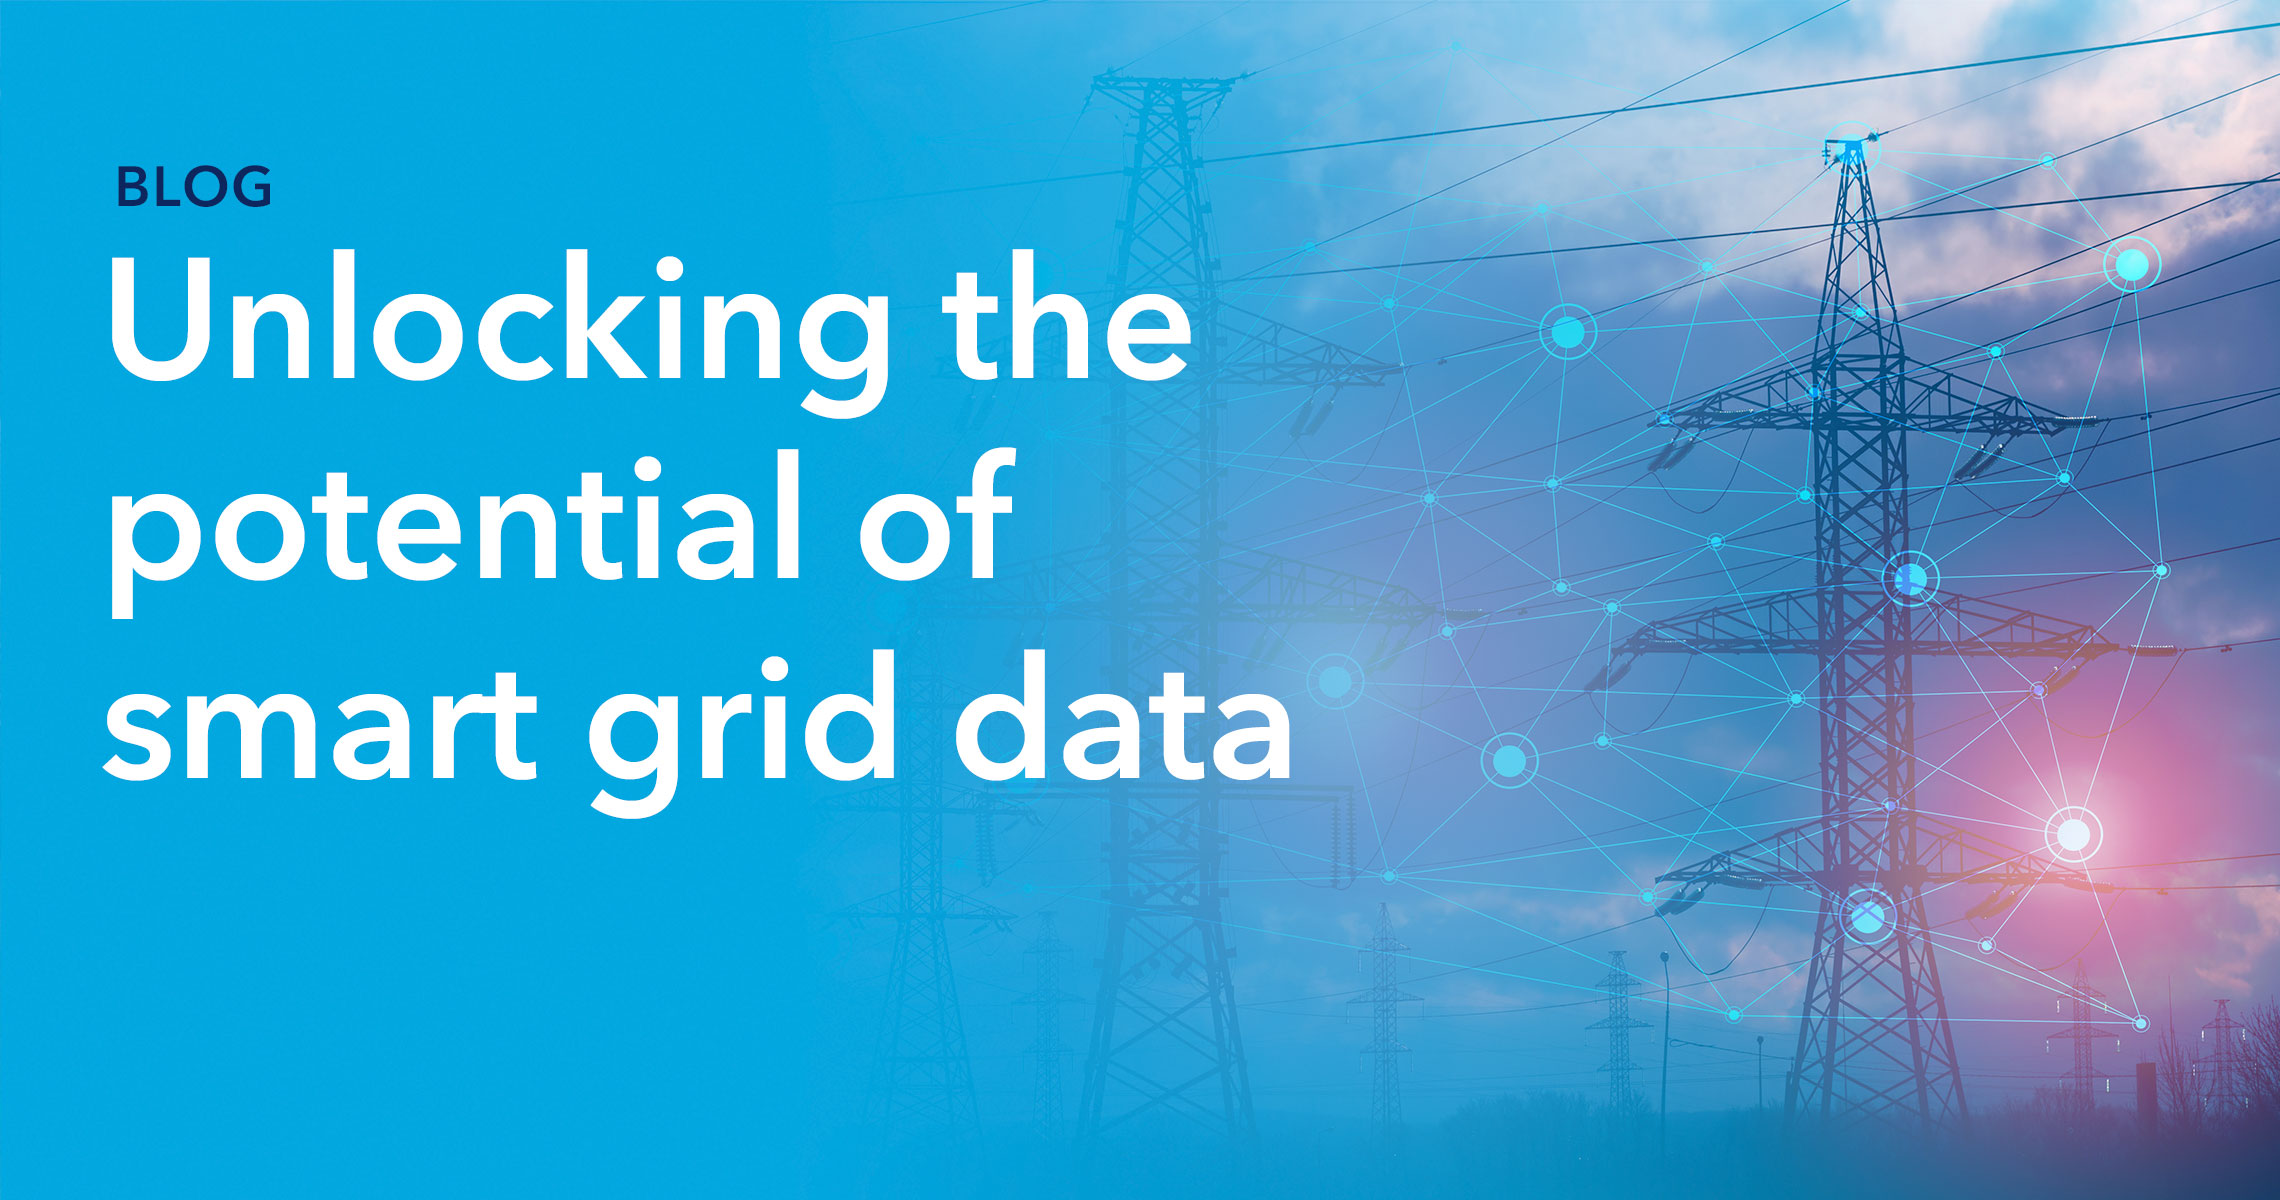 Smart grid data